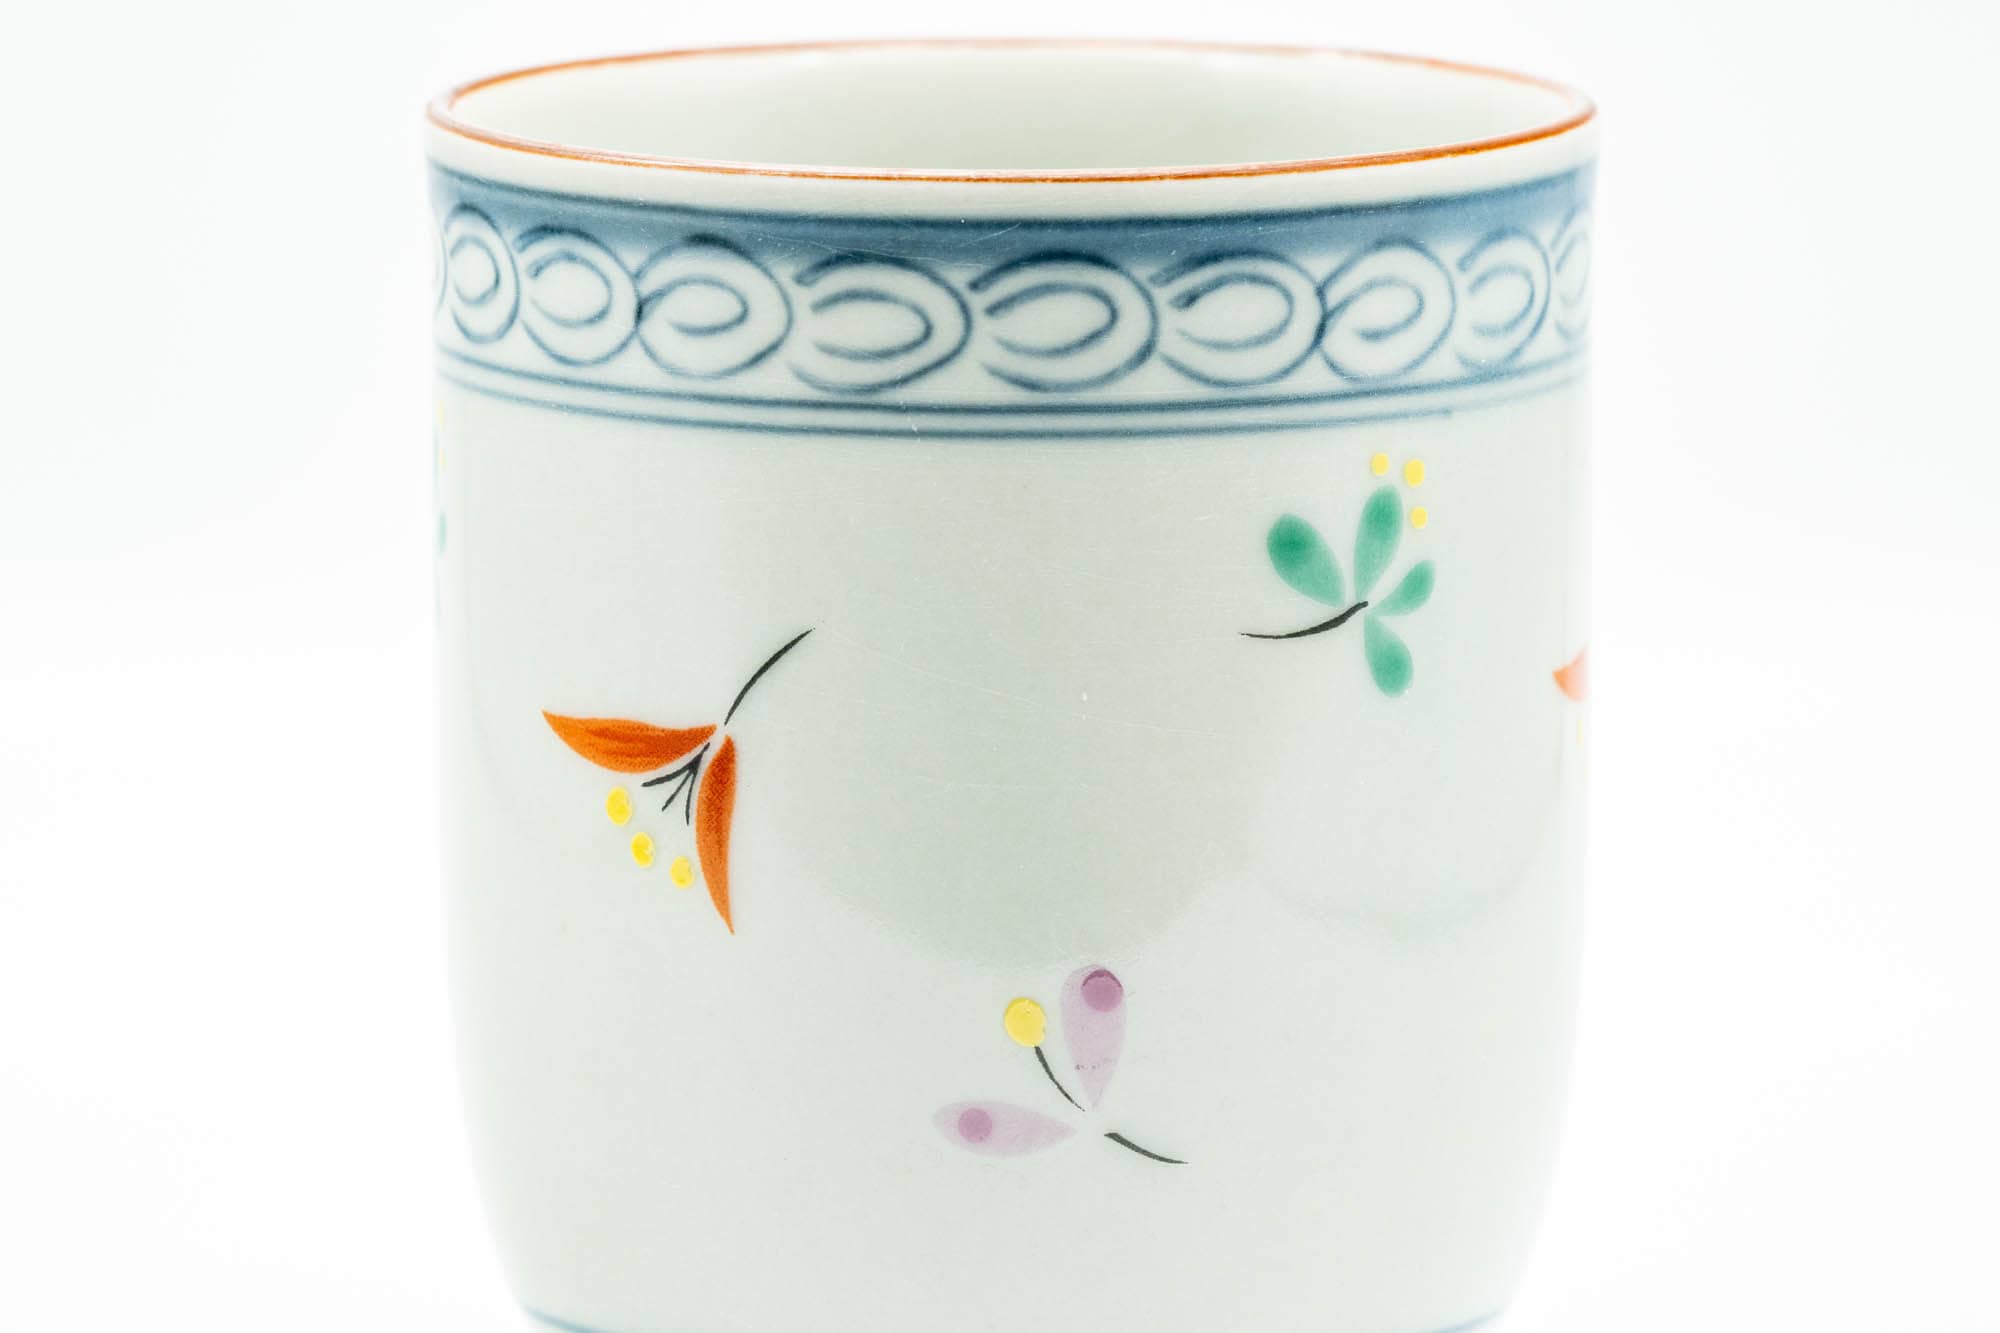 Japanese Teacup - Blue Floral Arita-yaki Yunomi - 170ml